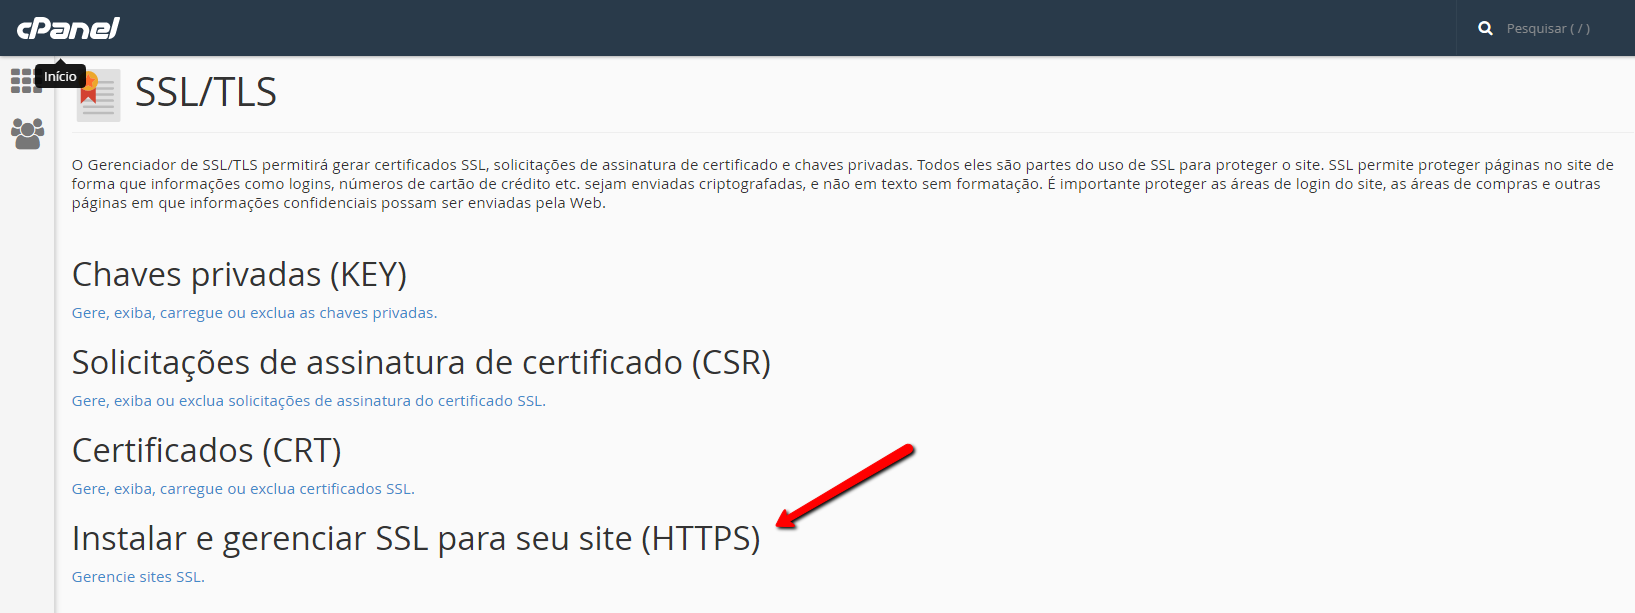 Instalar e gerenciar SSL para seu site (HTTPS)